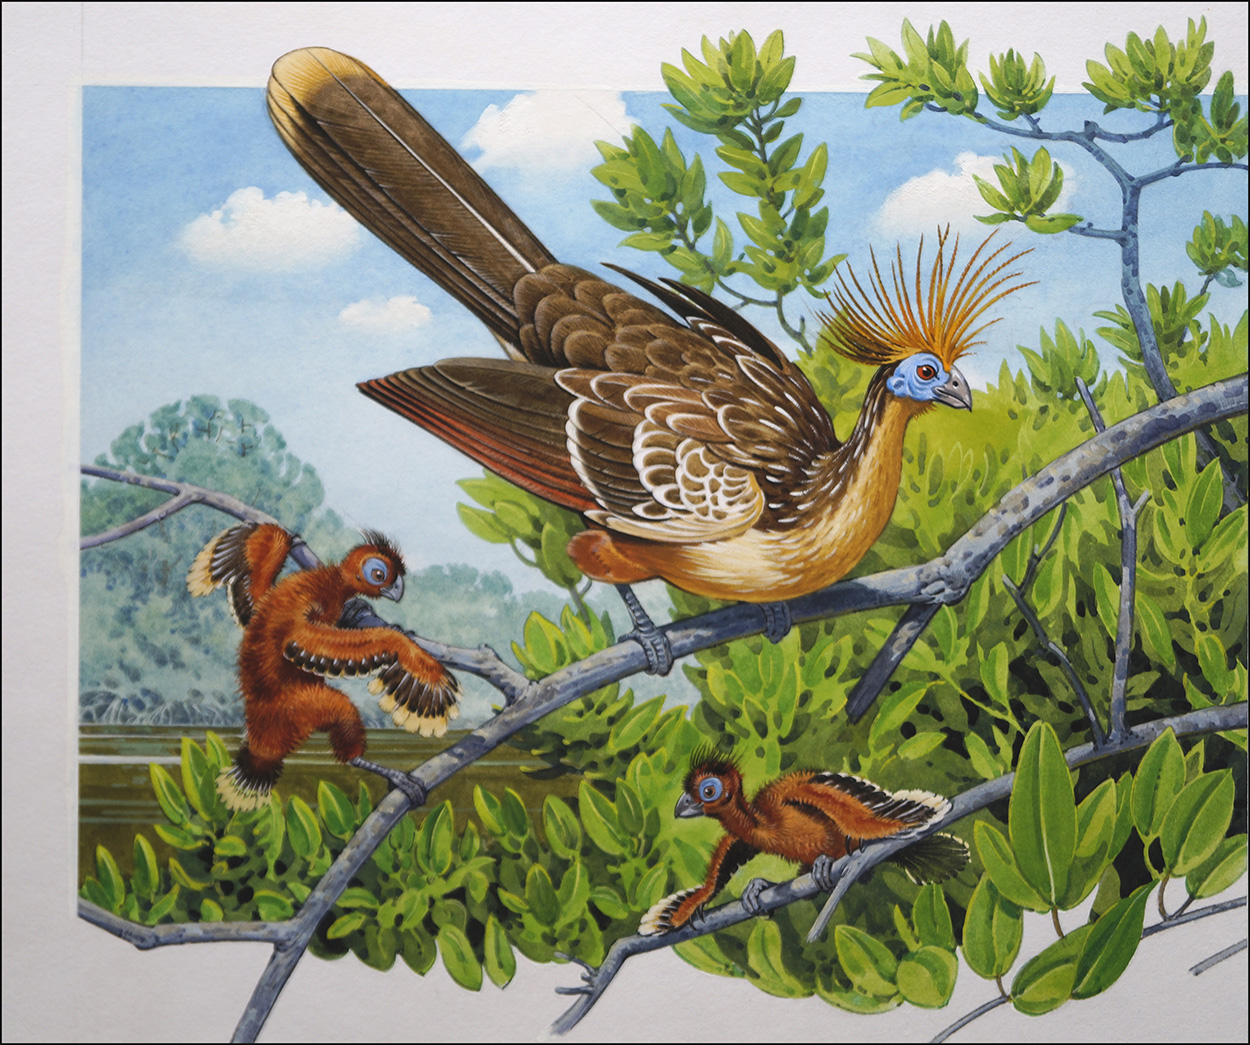 The Strange and Curious Hoatzin Bird (Original) art by Bernard Long at The Illustration Art Gallery